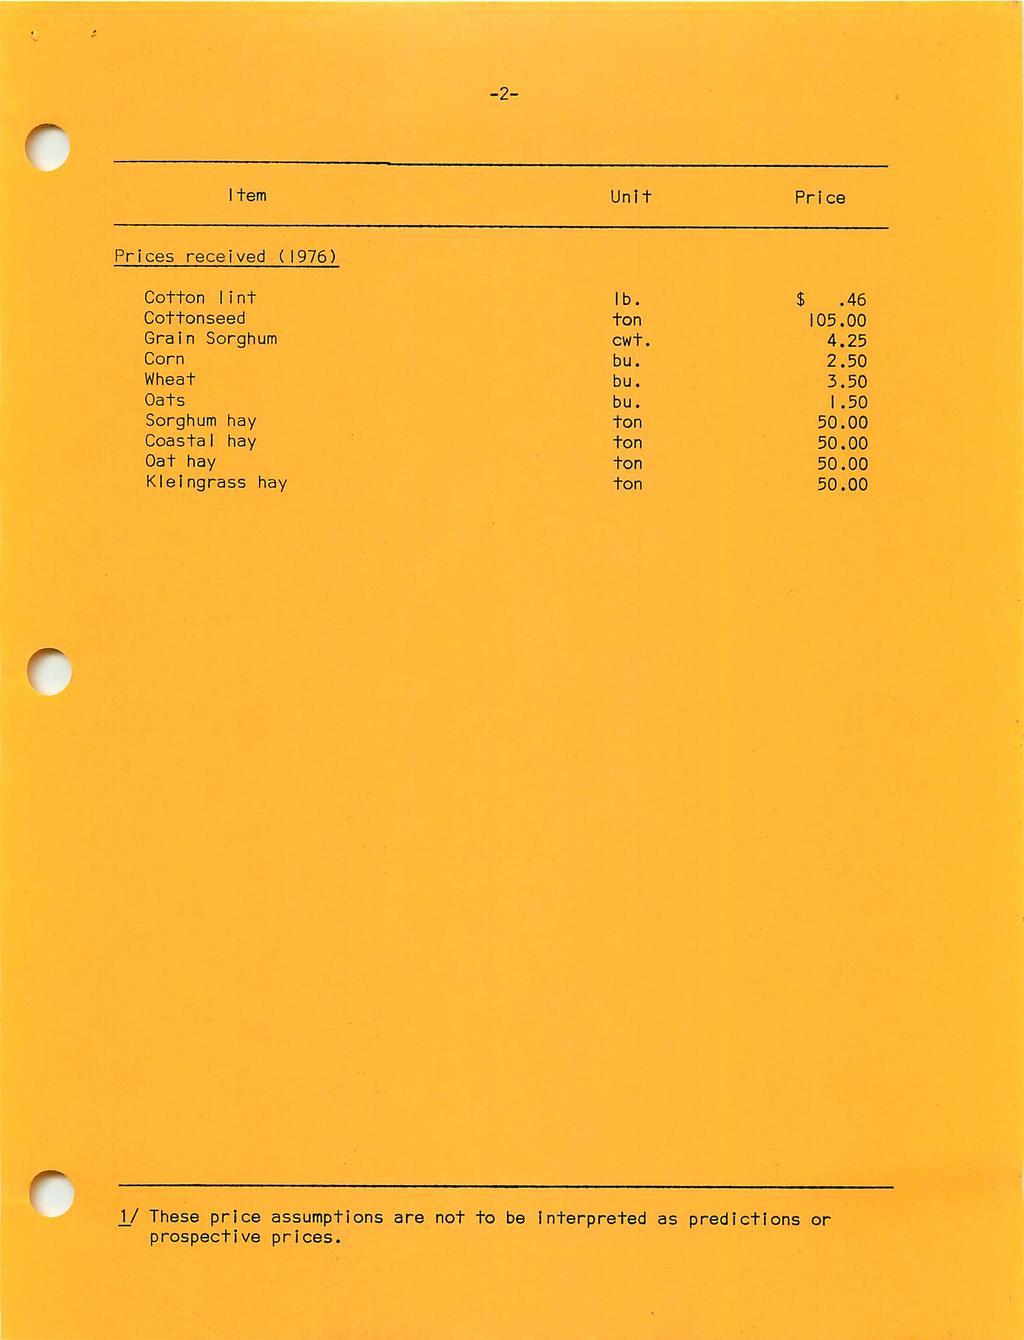 r -2- I tern Unit Price Prices received (1976) Cotton Ii nt Cottonseed Grain Sorghum Corn Wheat Oats Sorghum hay CoastaI hay Oat hay Kleingrass hay ton bu.